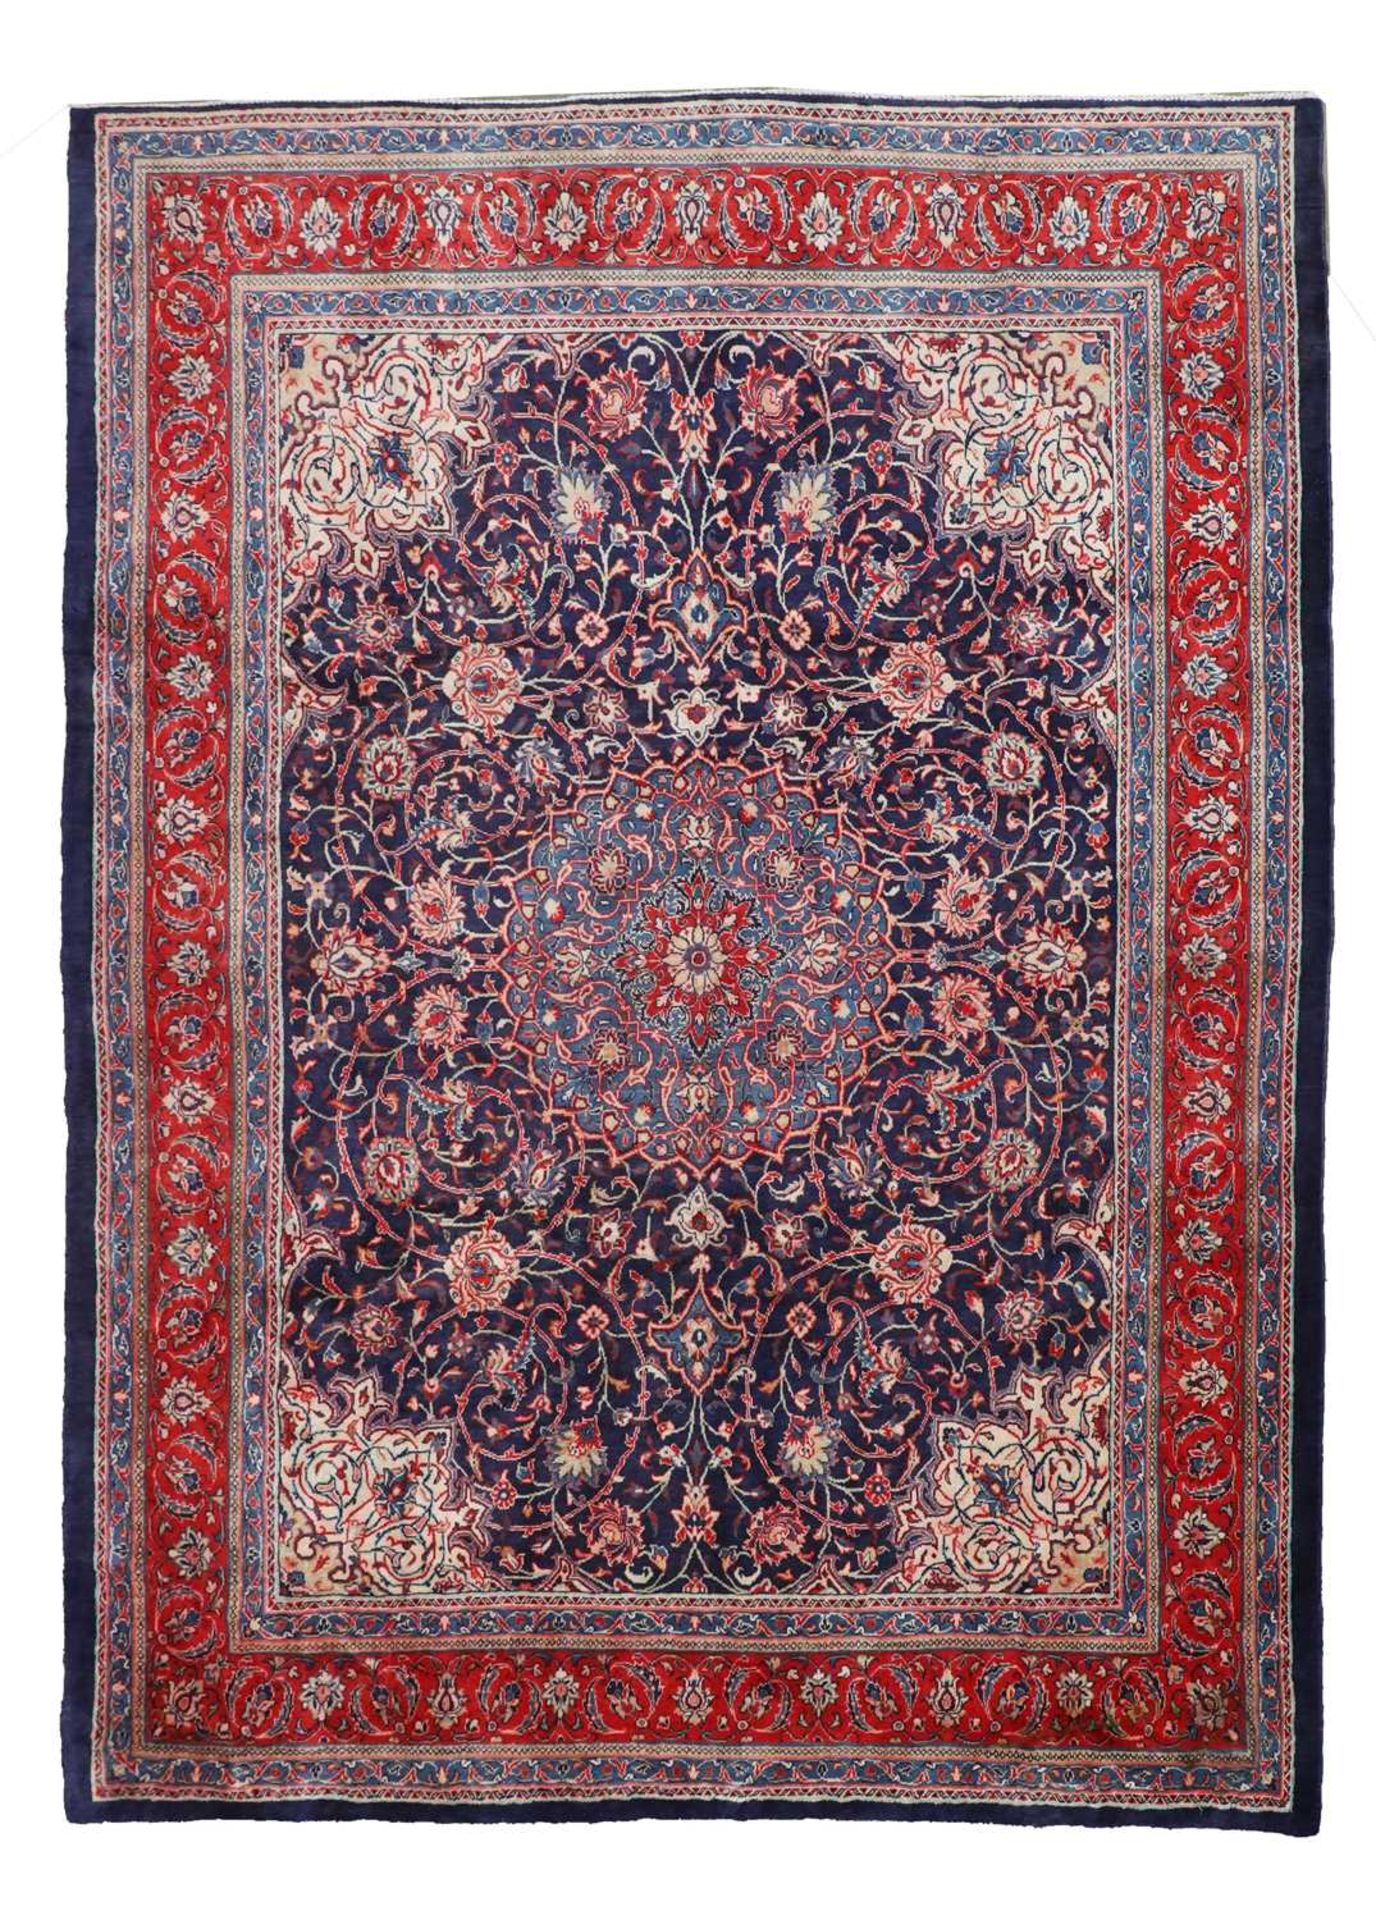 A Persian Mahal rug of Ziegler design,